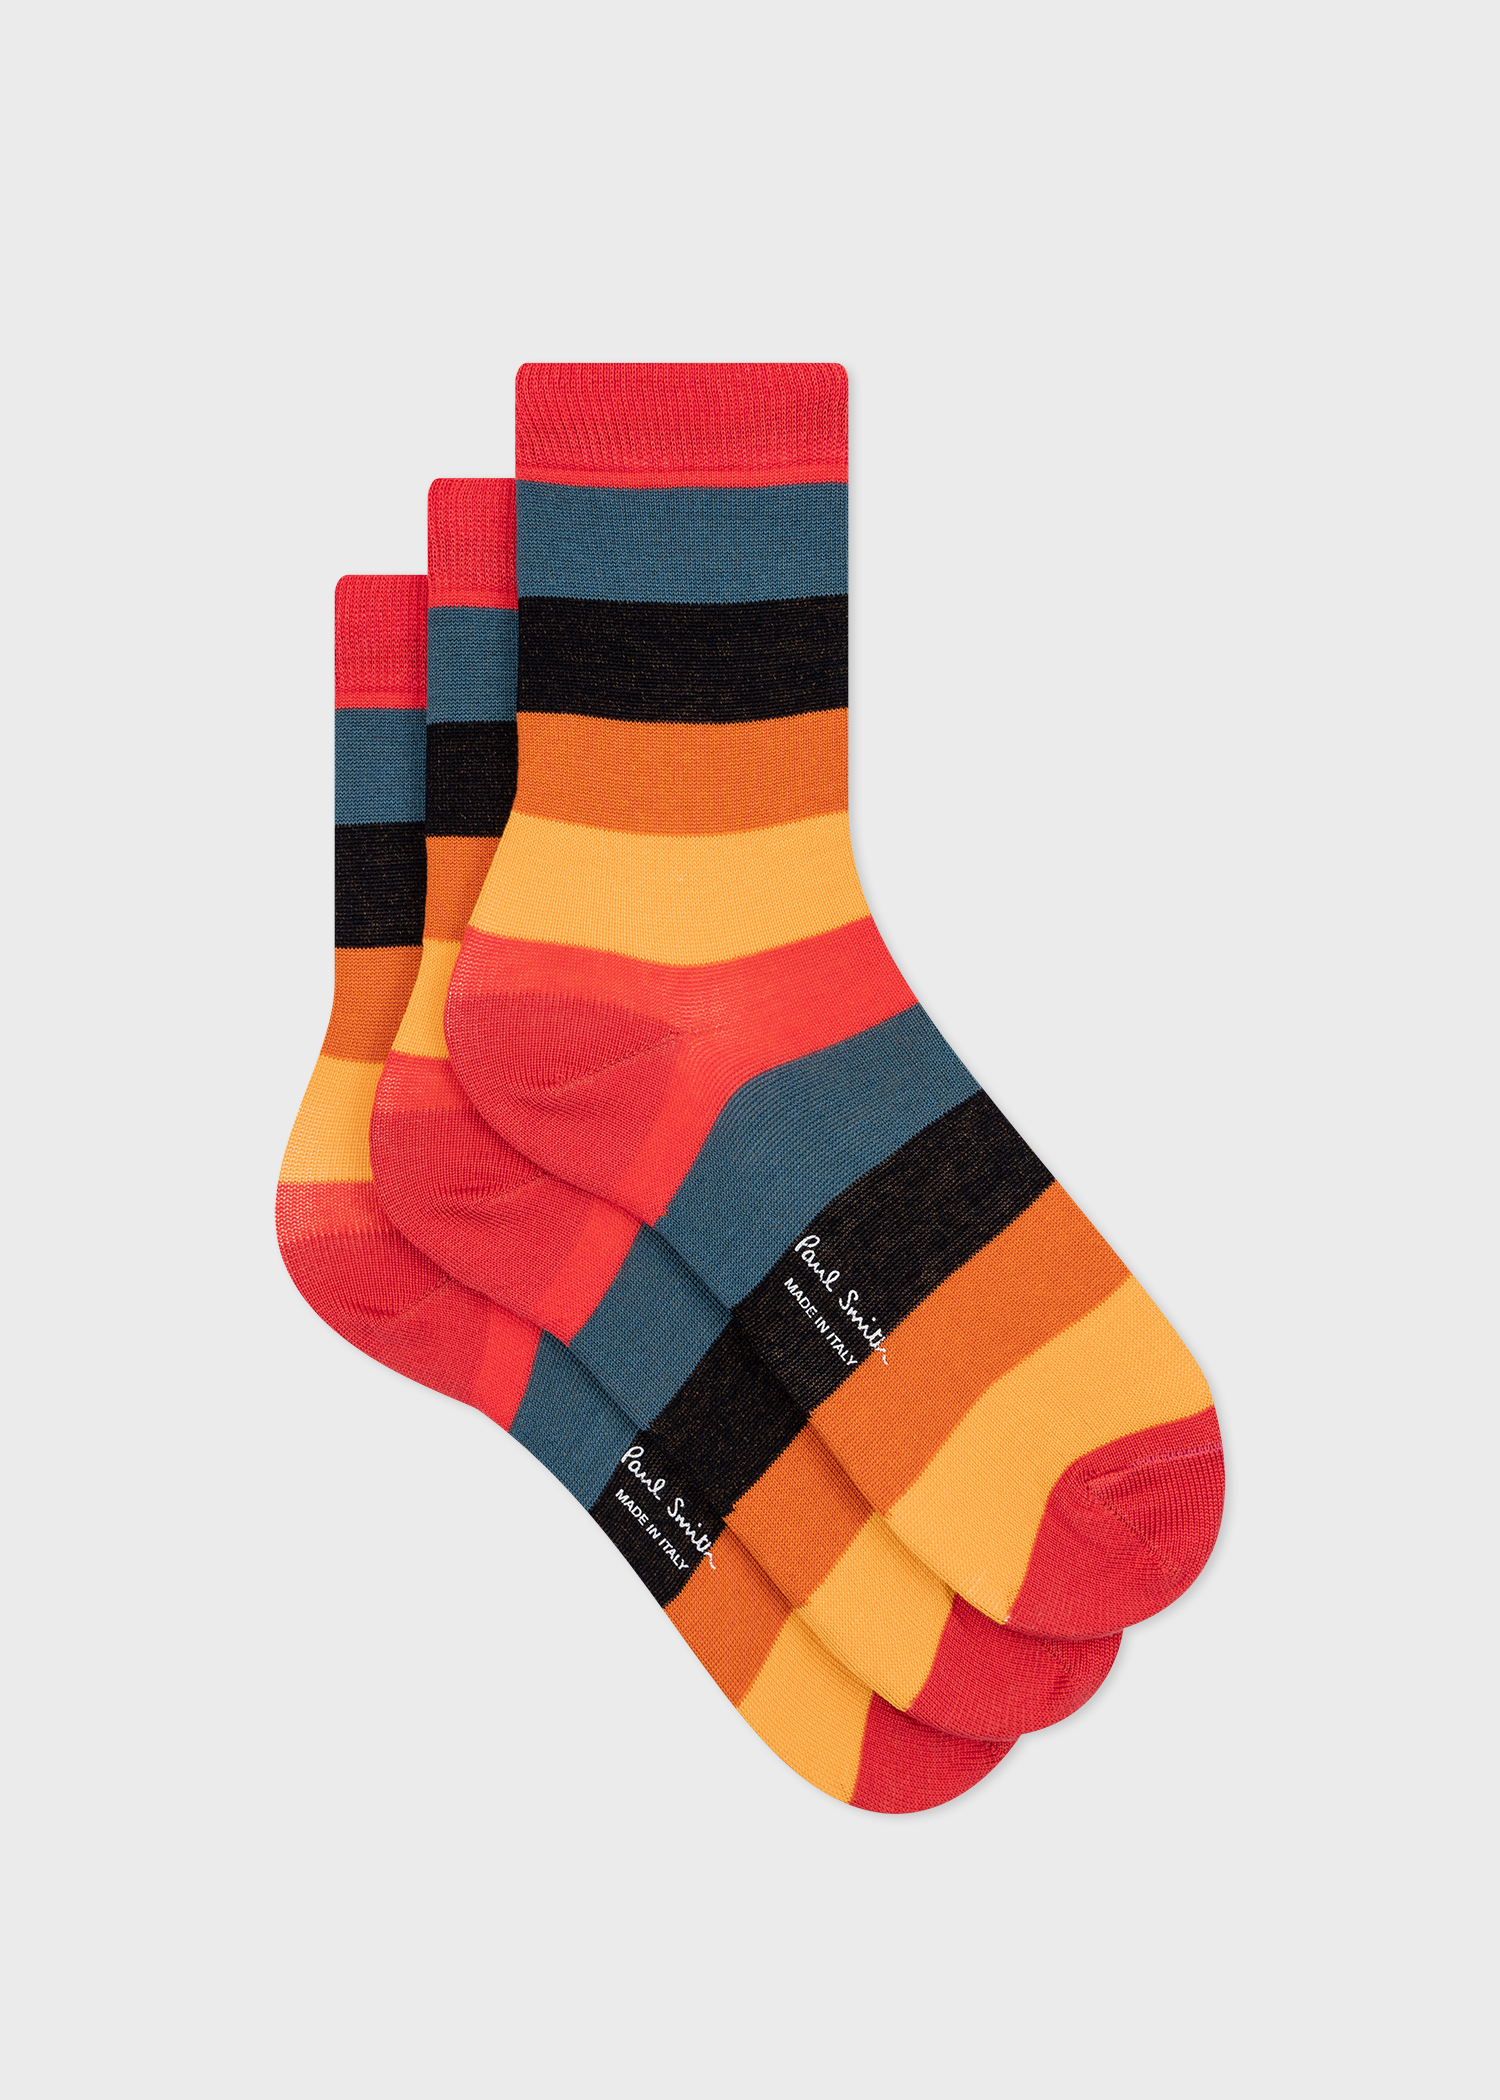 Women's 'Artist Stripe' Socks Three Pack